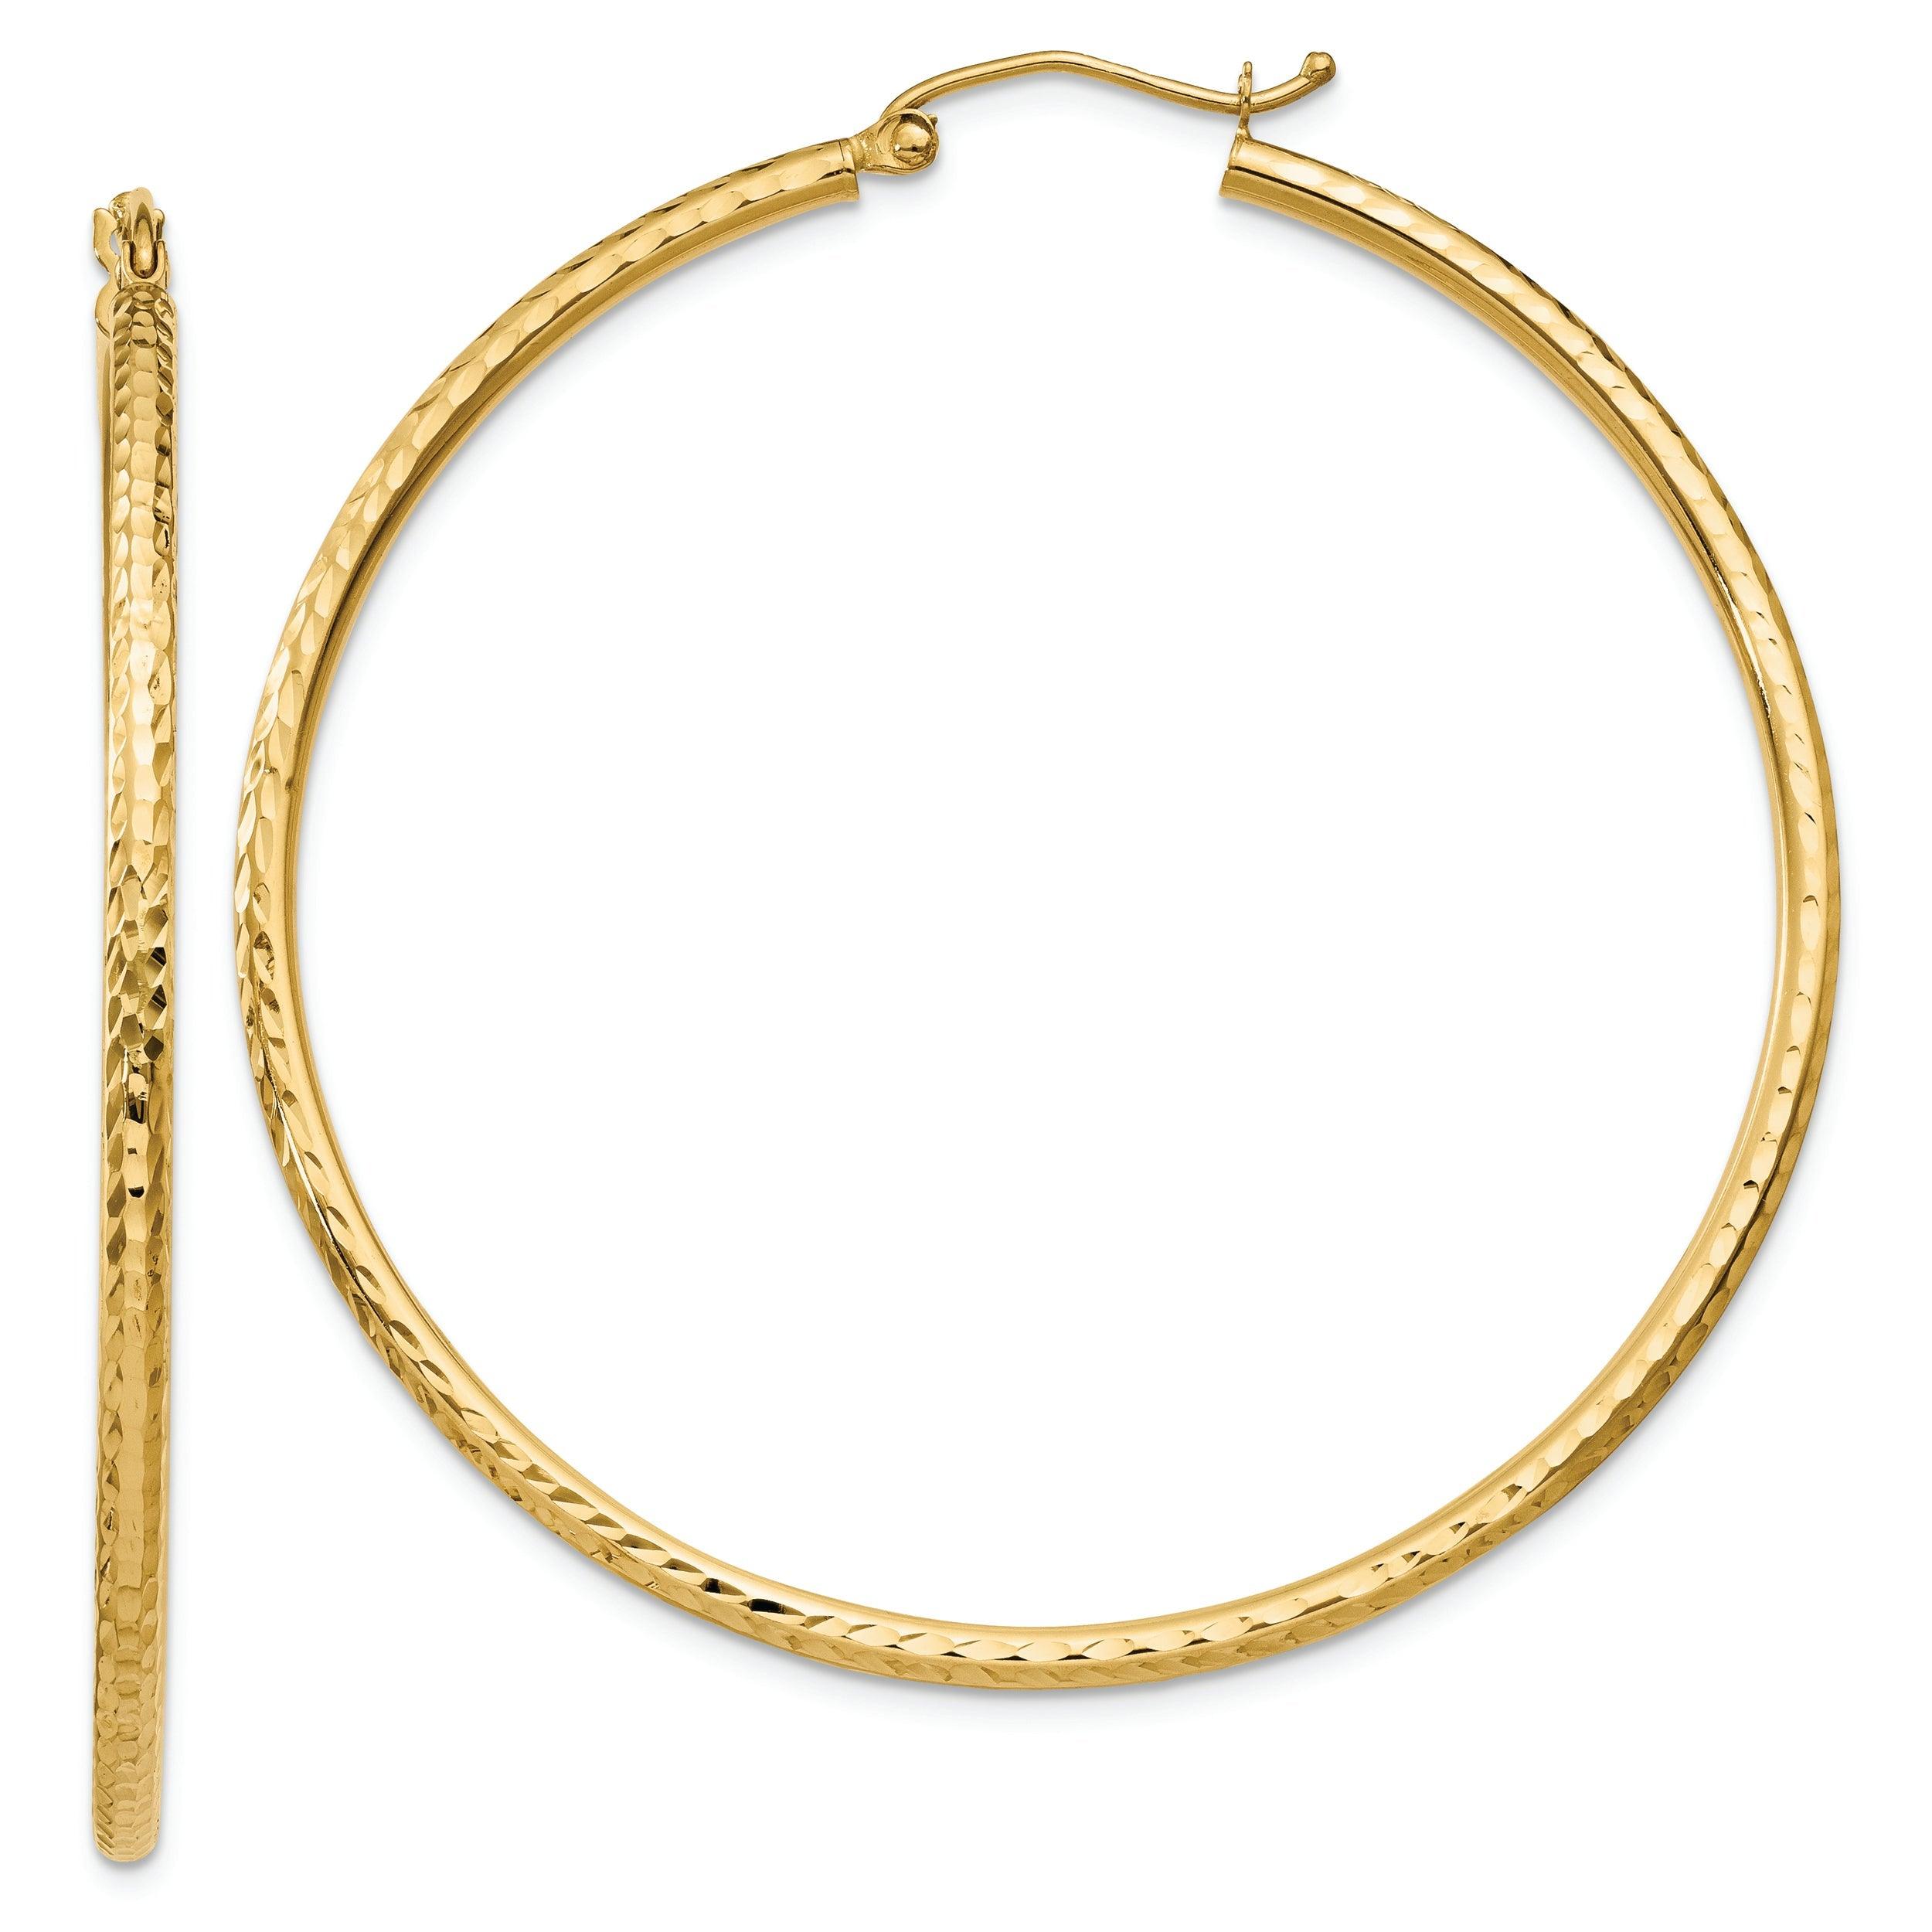 Quality Gold Earrings 14k Diamond-cut 2mm Round Tube Hoop Earrings